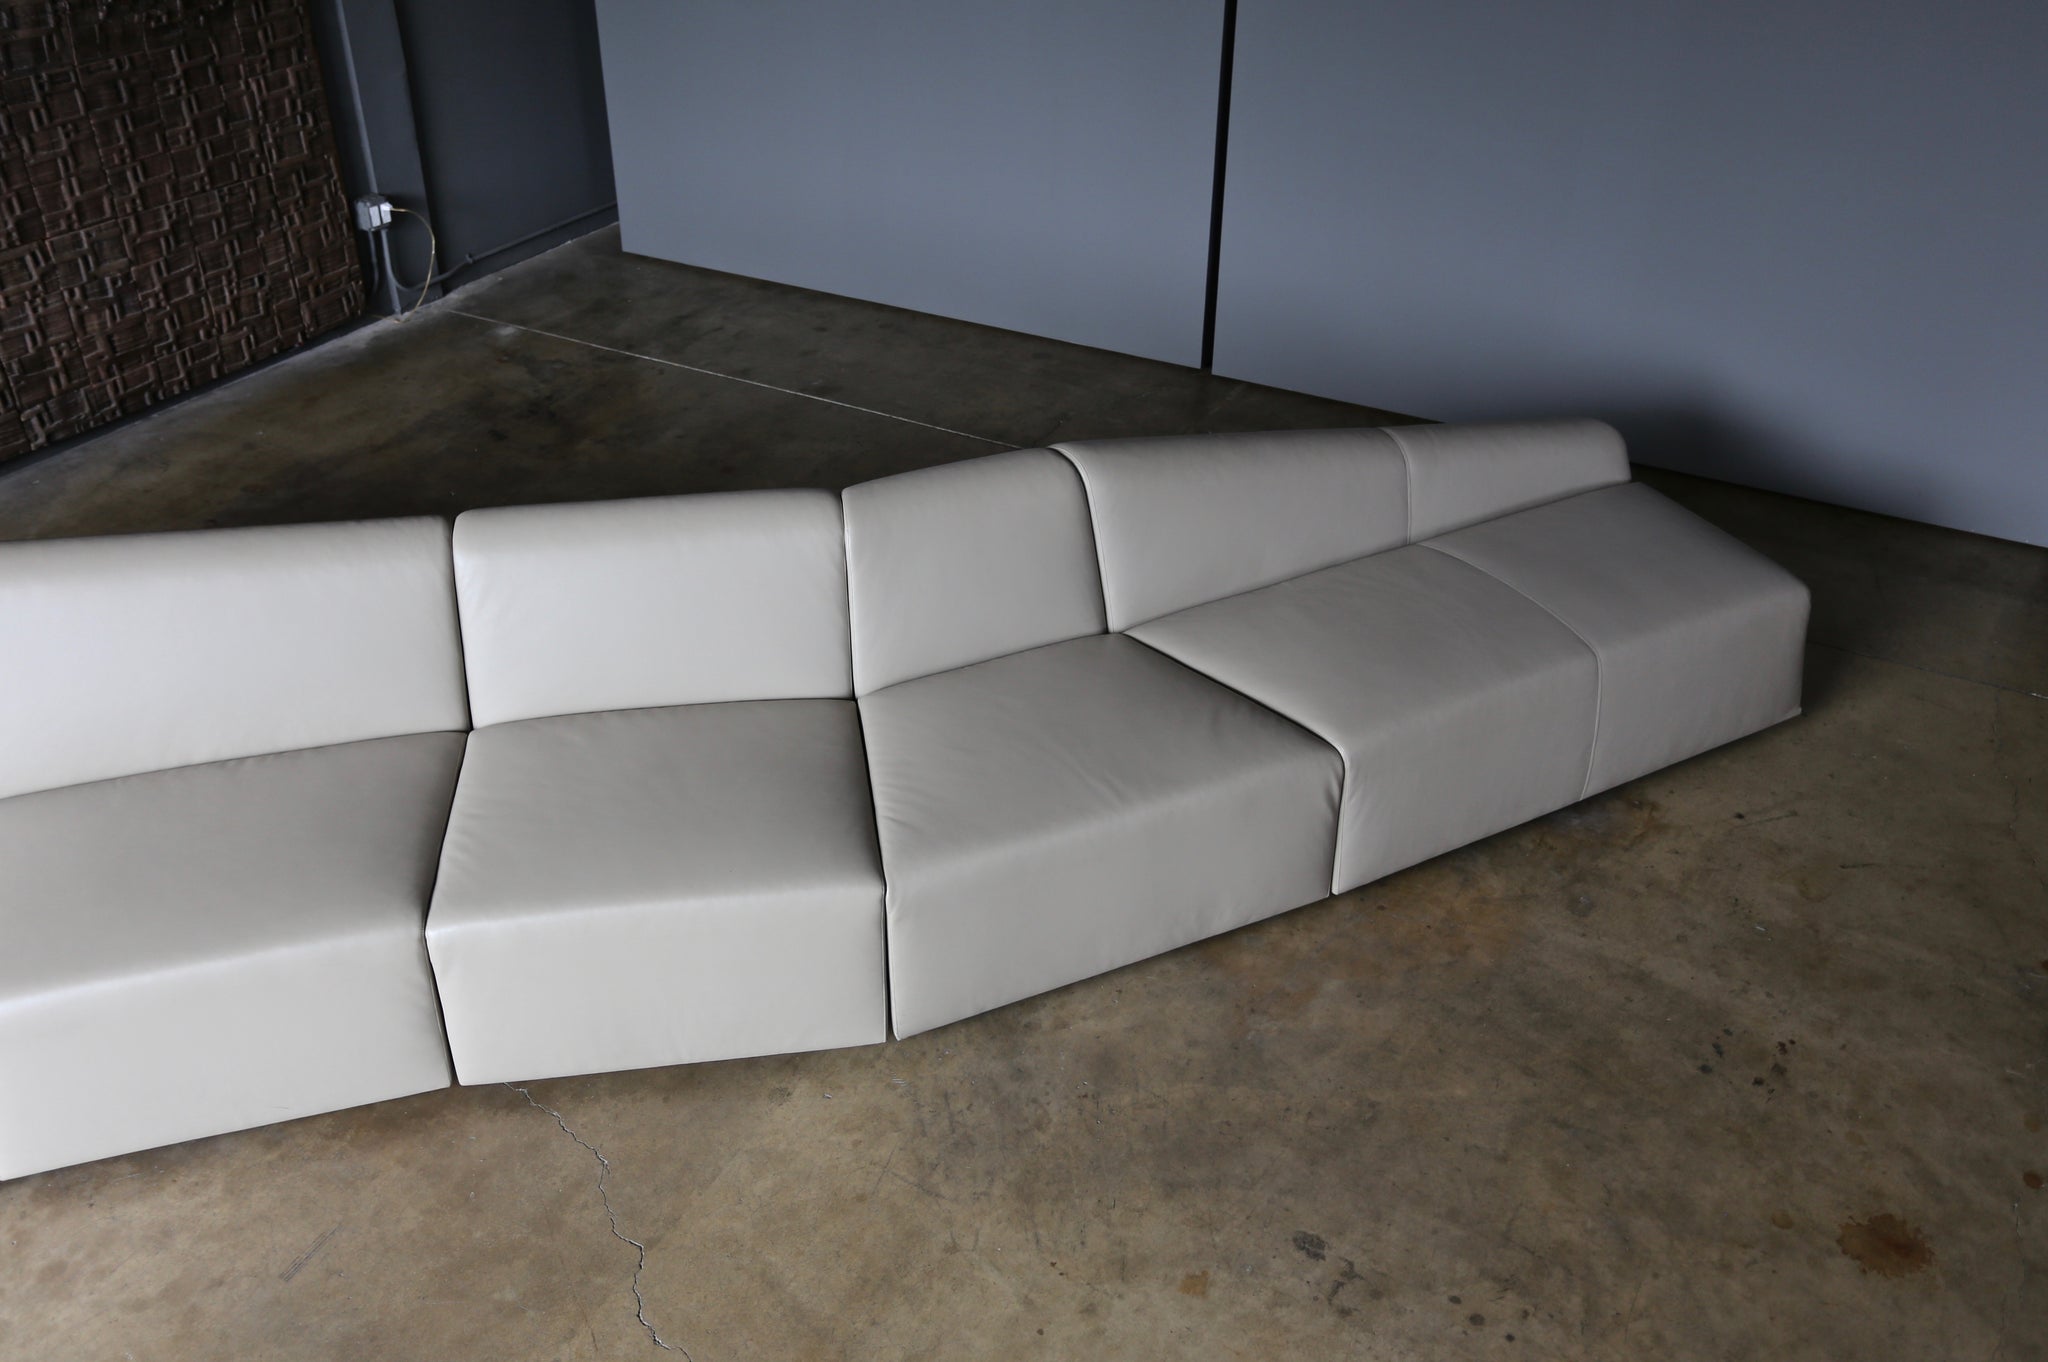 = SOLD = Patrick Jouin Modular Sofa for Bernhardt 2017